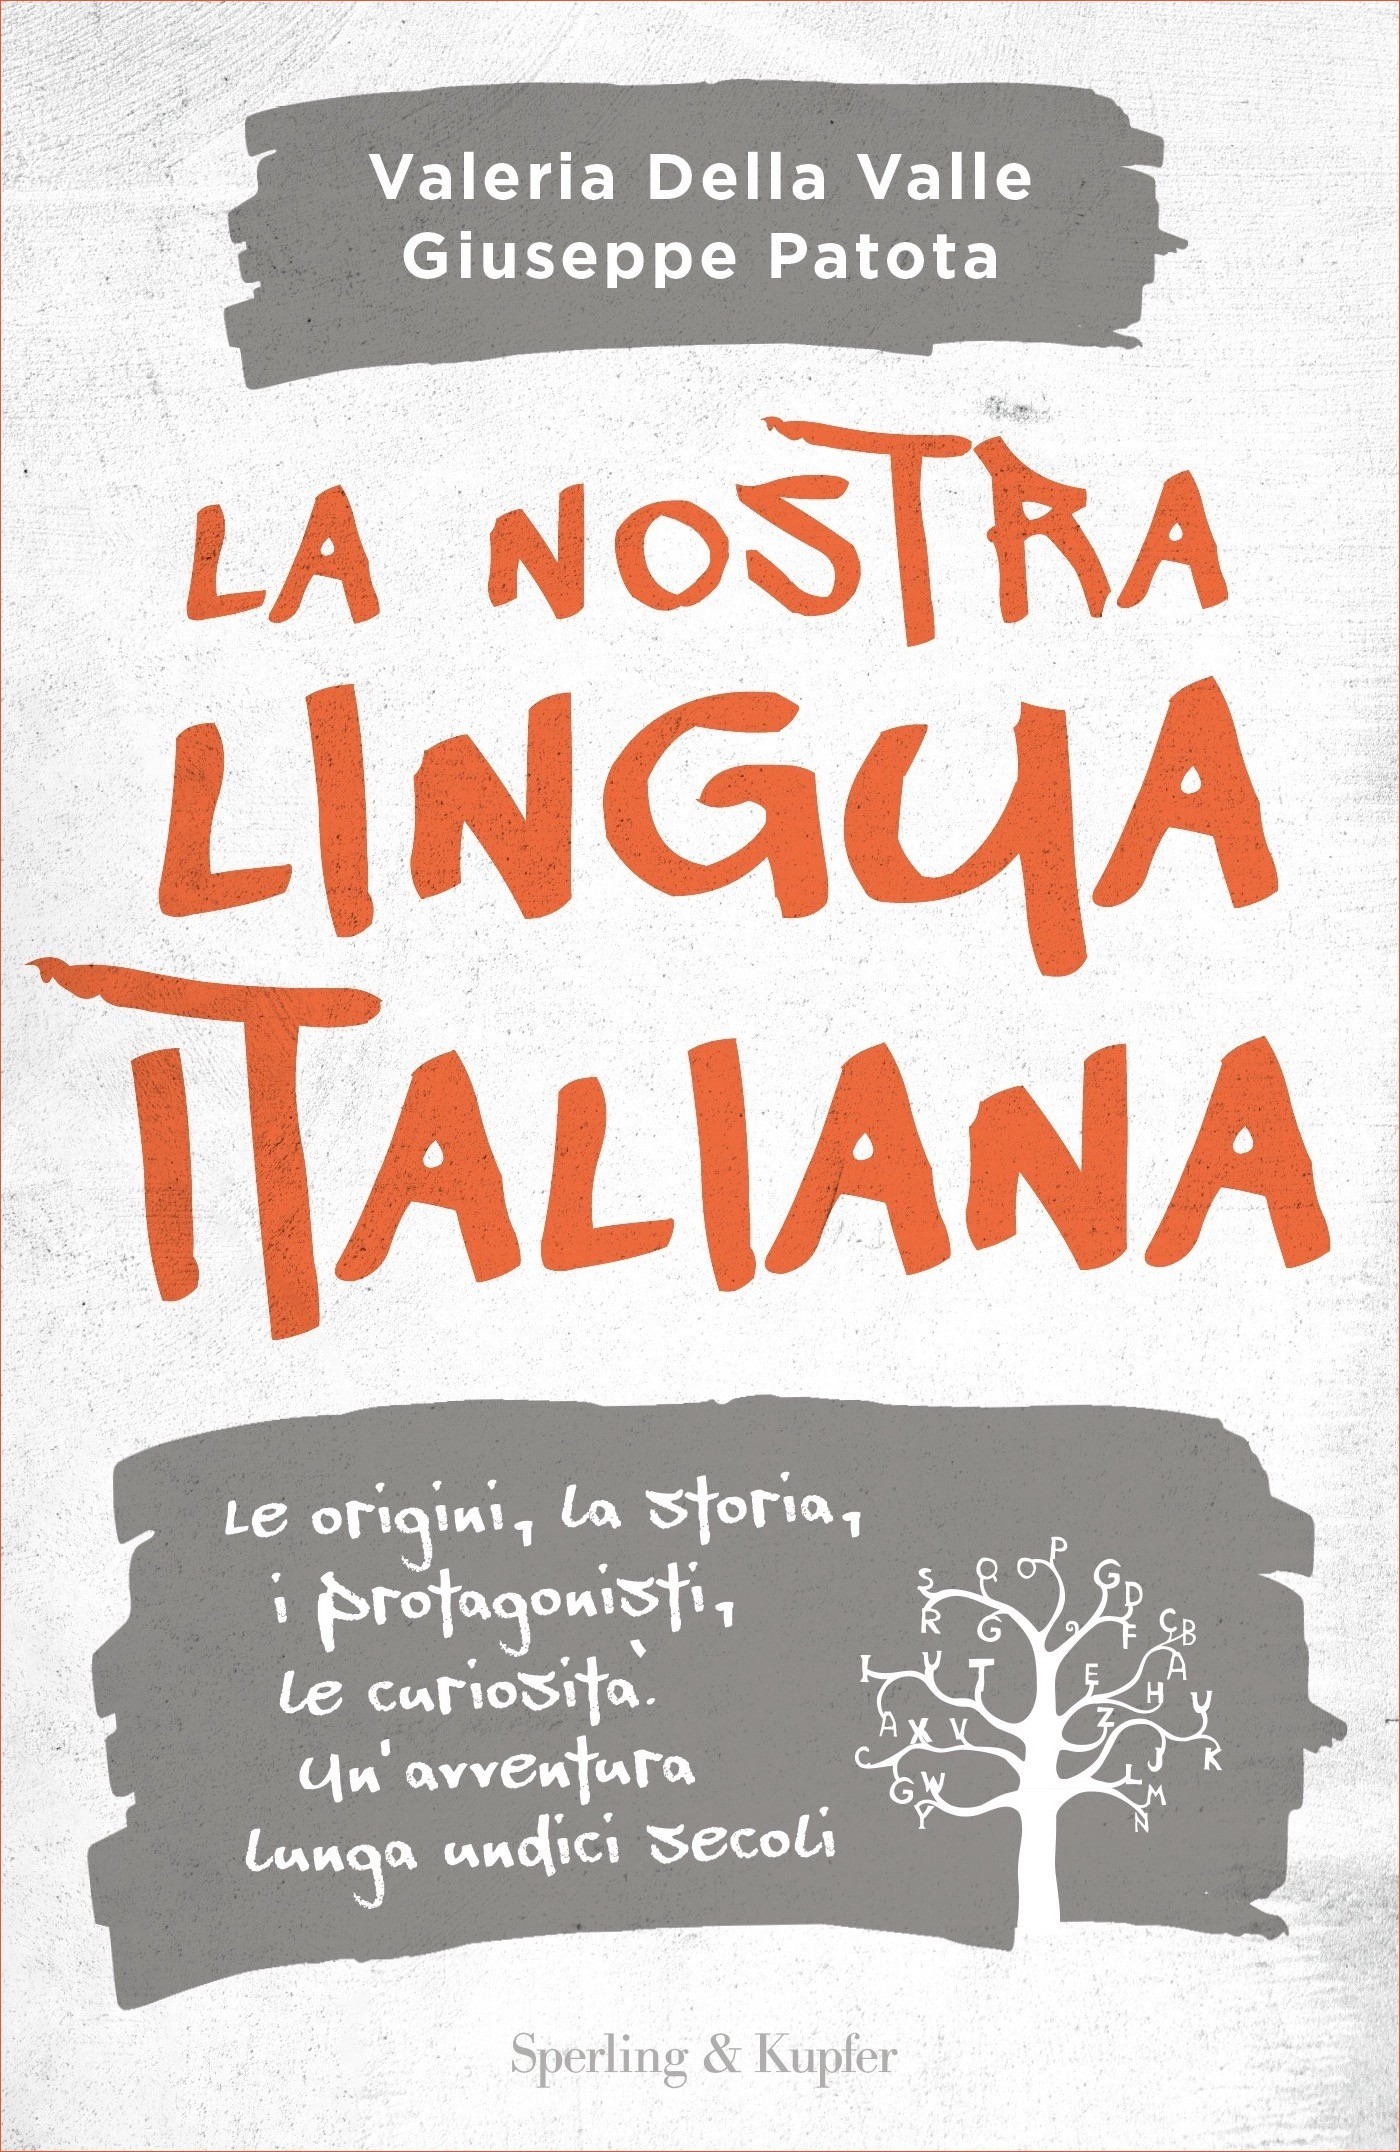 La nostra lingua italiana - Librerie.coop